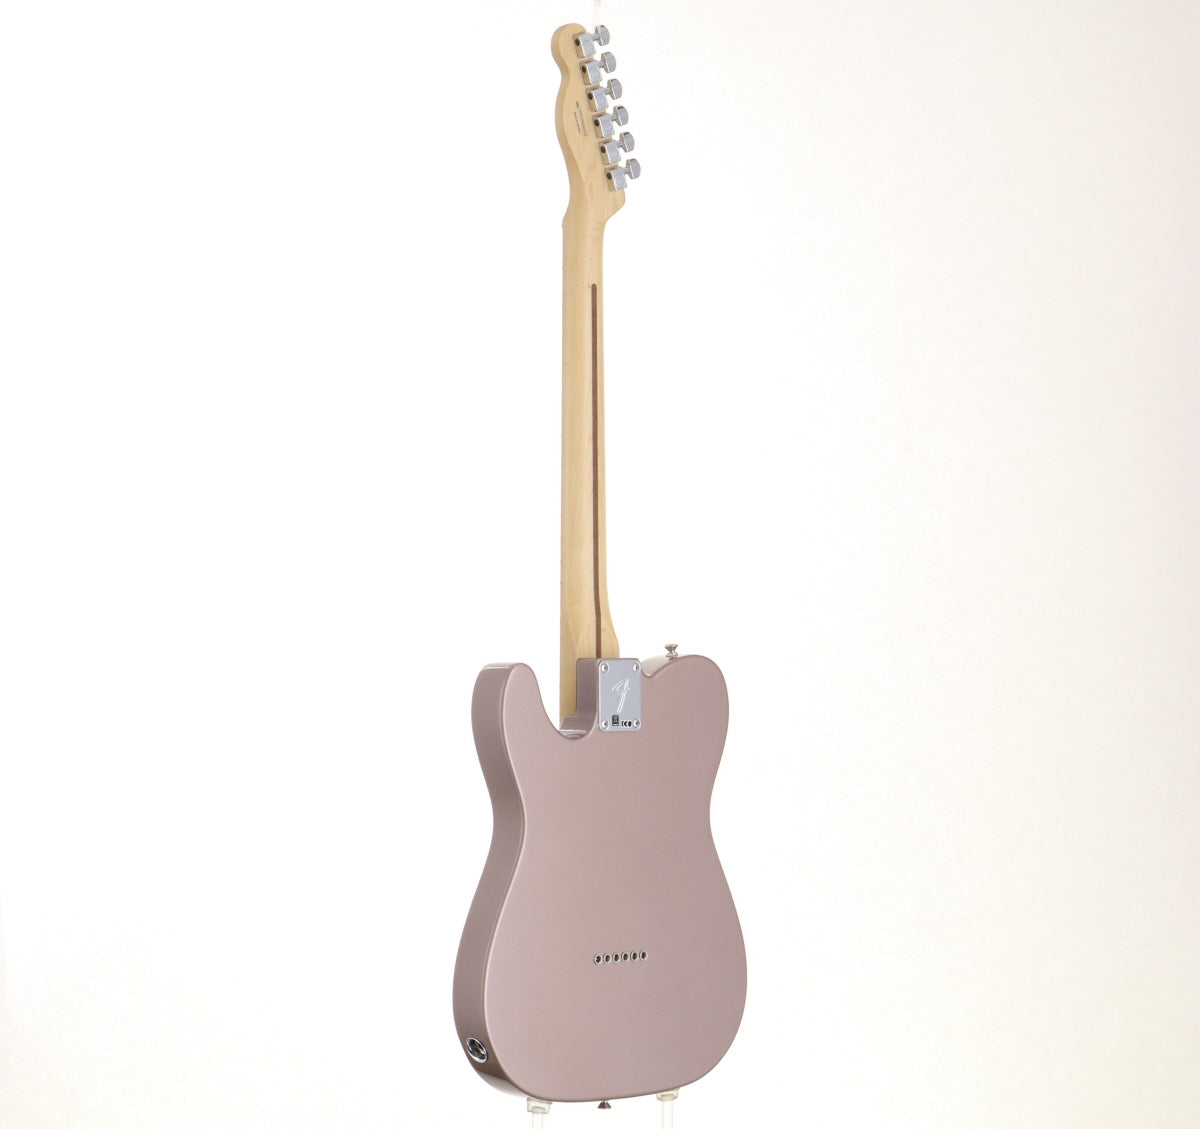 [SN MX20036862] USED Fender / Limited Edition Player Telecaster Burgundy Mist Metallic/M 2020 [08]